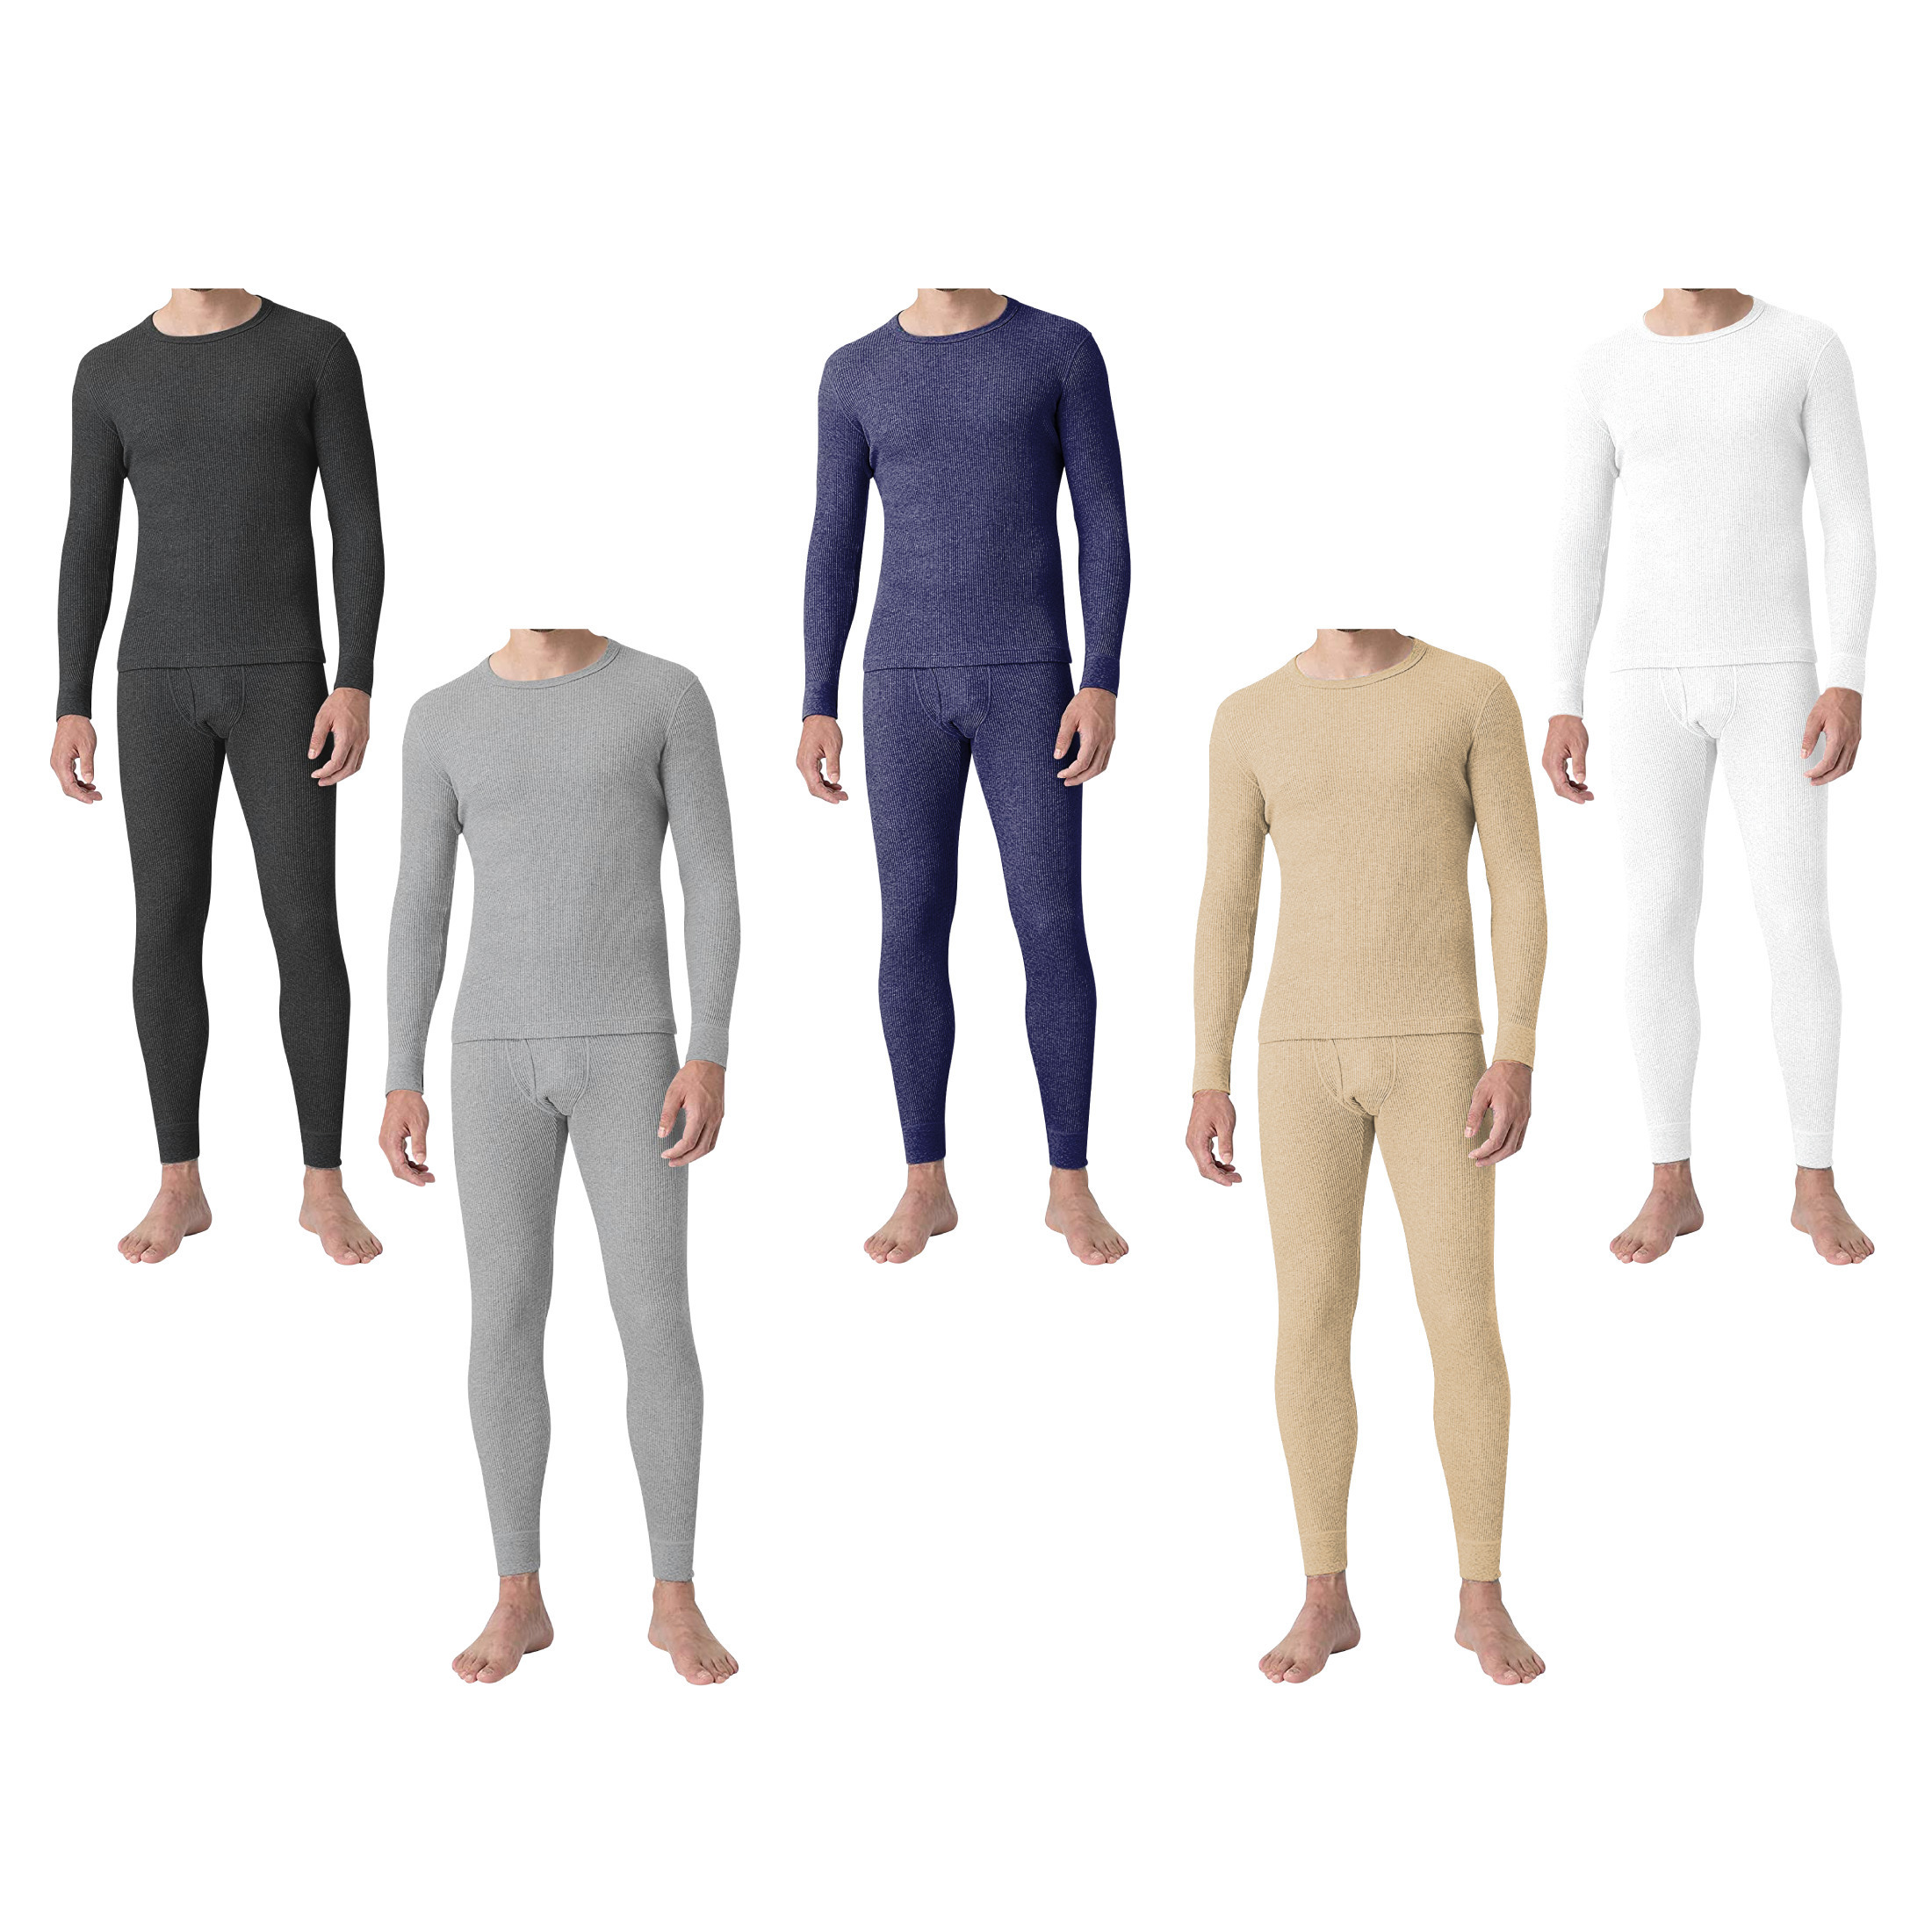 2-Sets: Men's Super Soft Cotton Waffle Knit Winter Thermal Underwear Set - Grey & Grey, Small